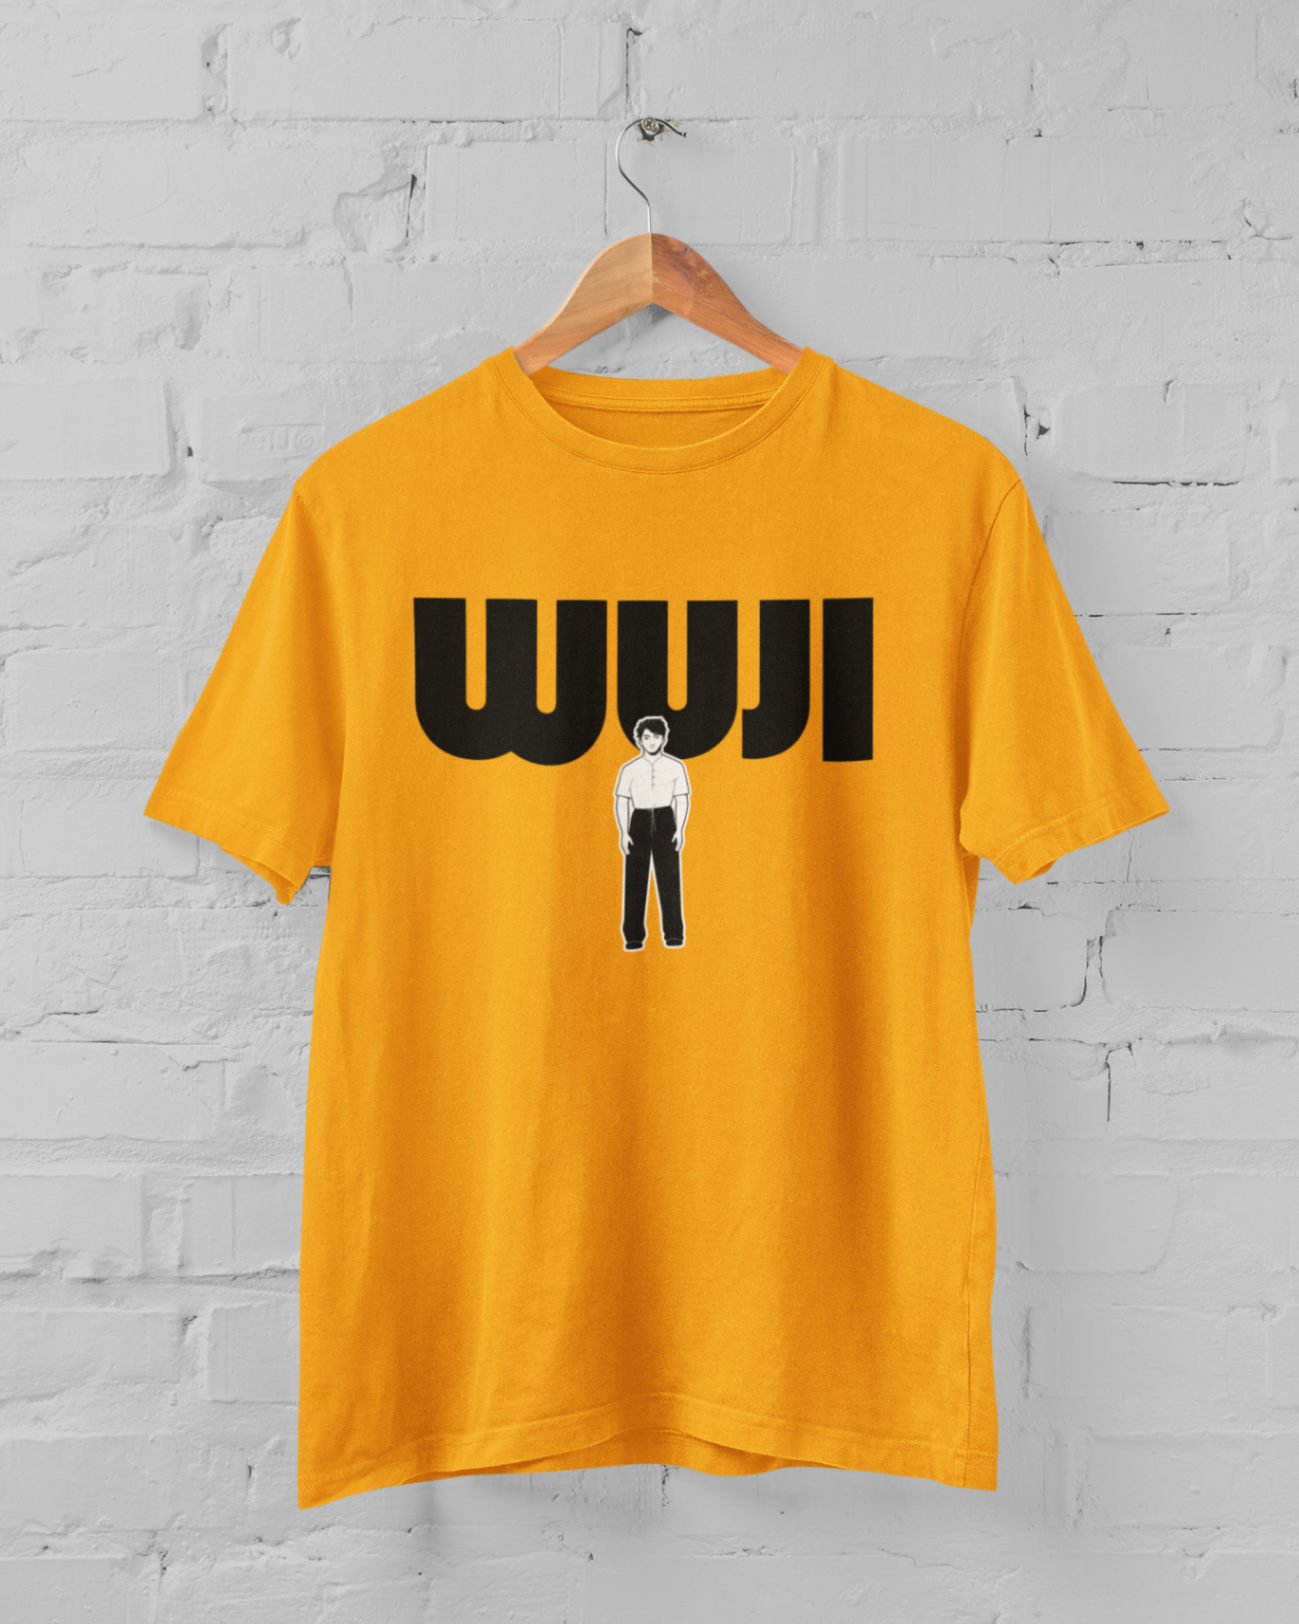 Men's "WUJI" T-shirt